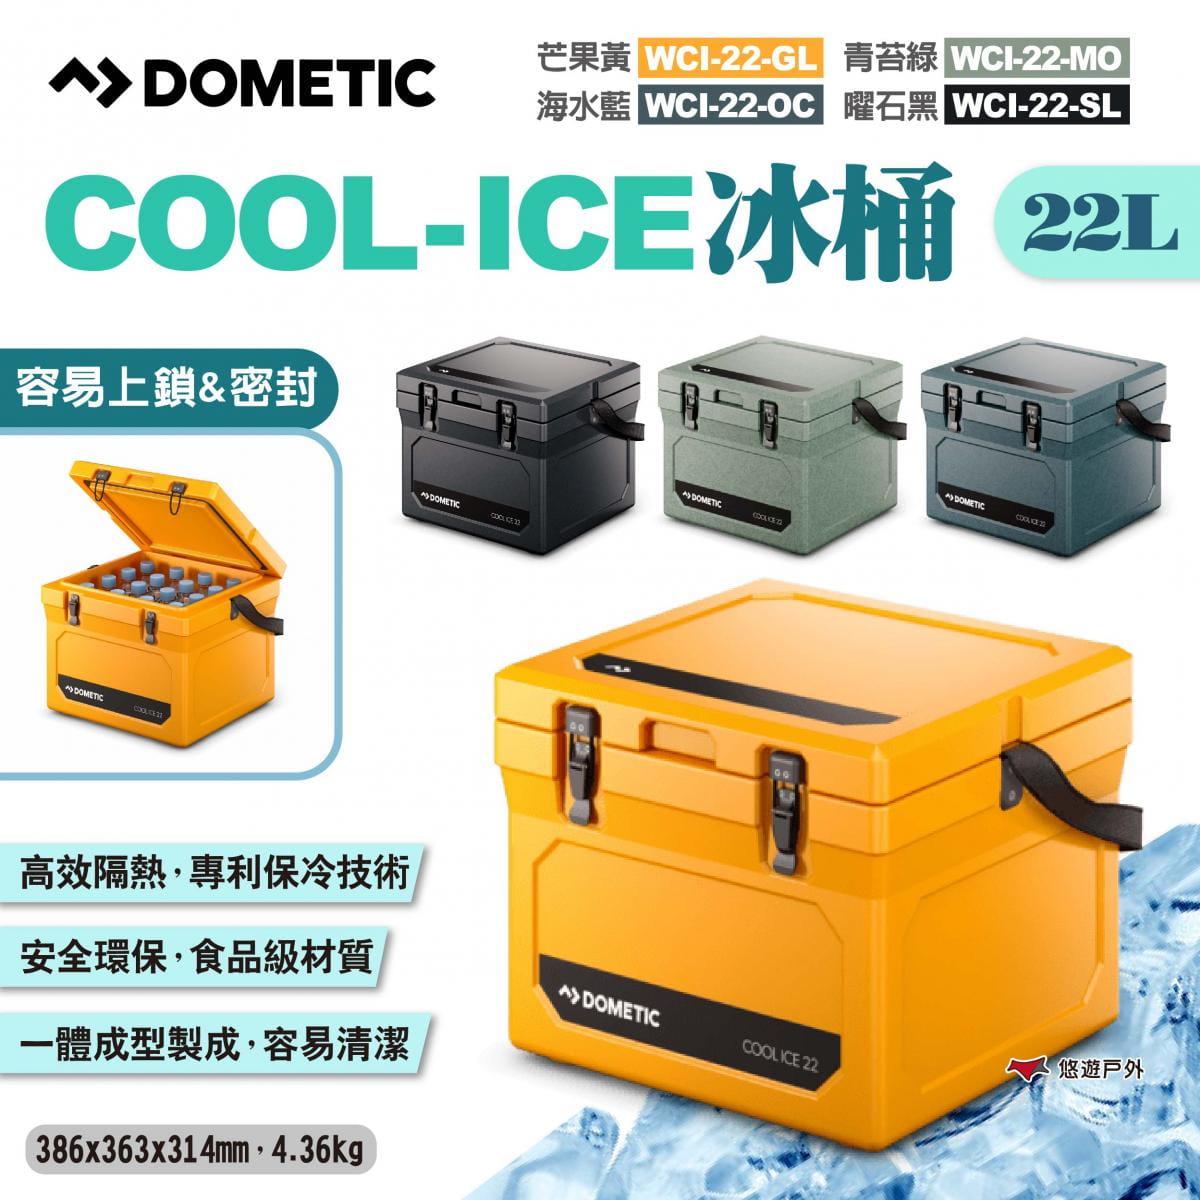 【DOMETIC】COOL-ICE冰桶 WCI-22-GL/MO/OC/SL 四色 悠遊戶外 1